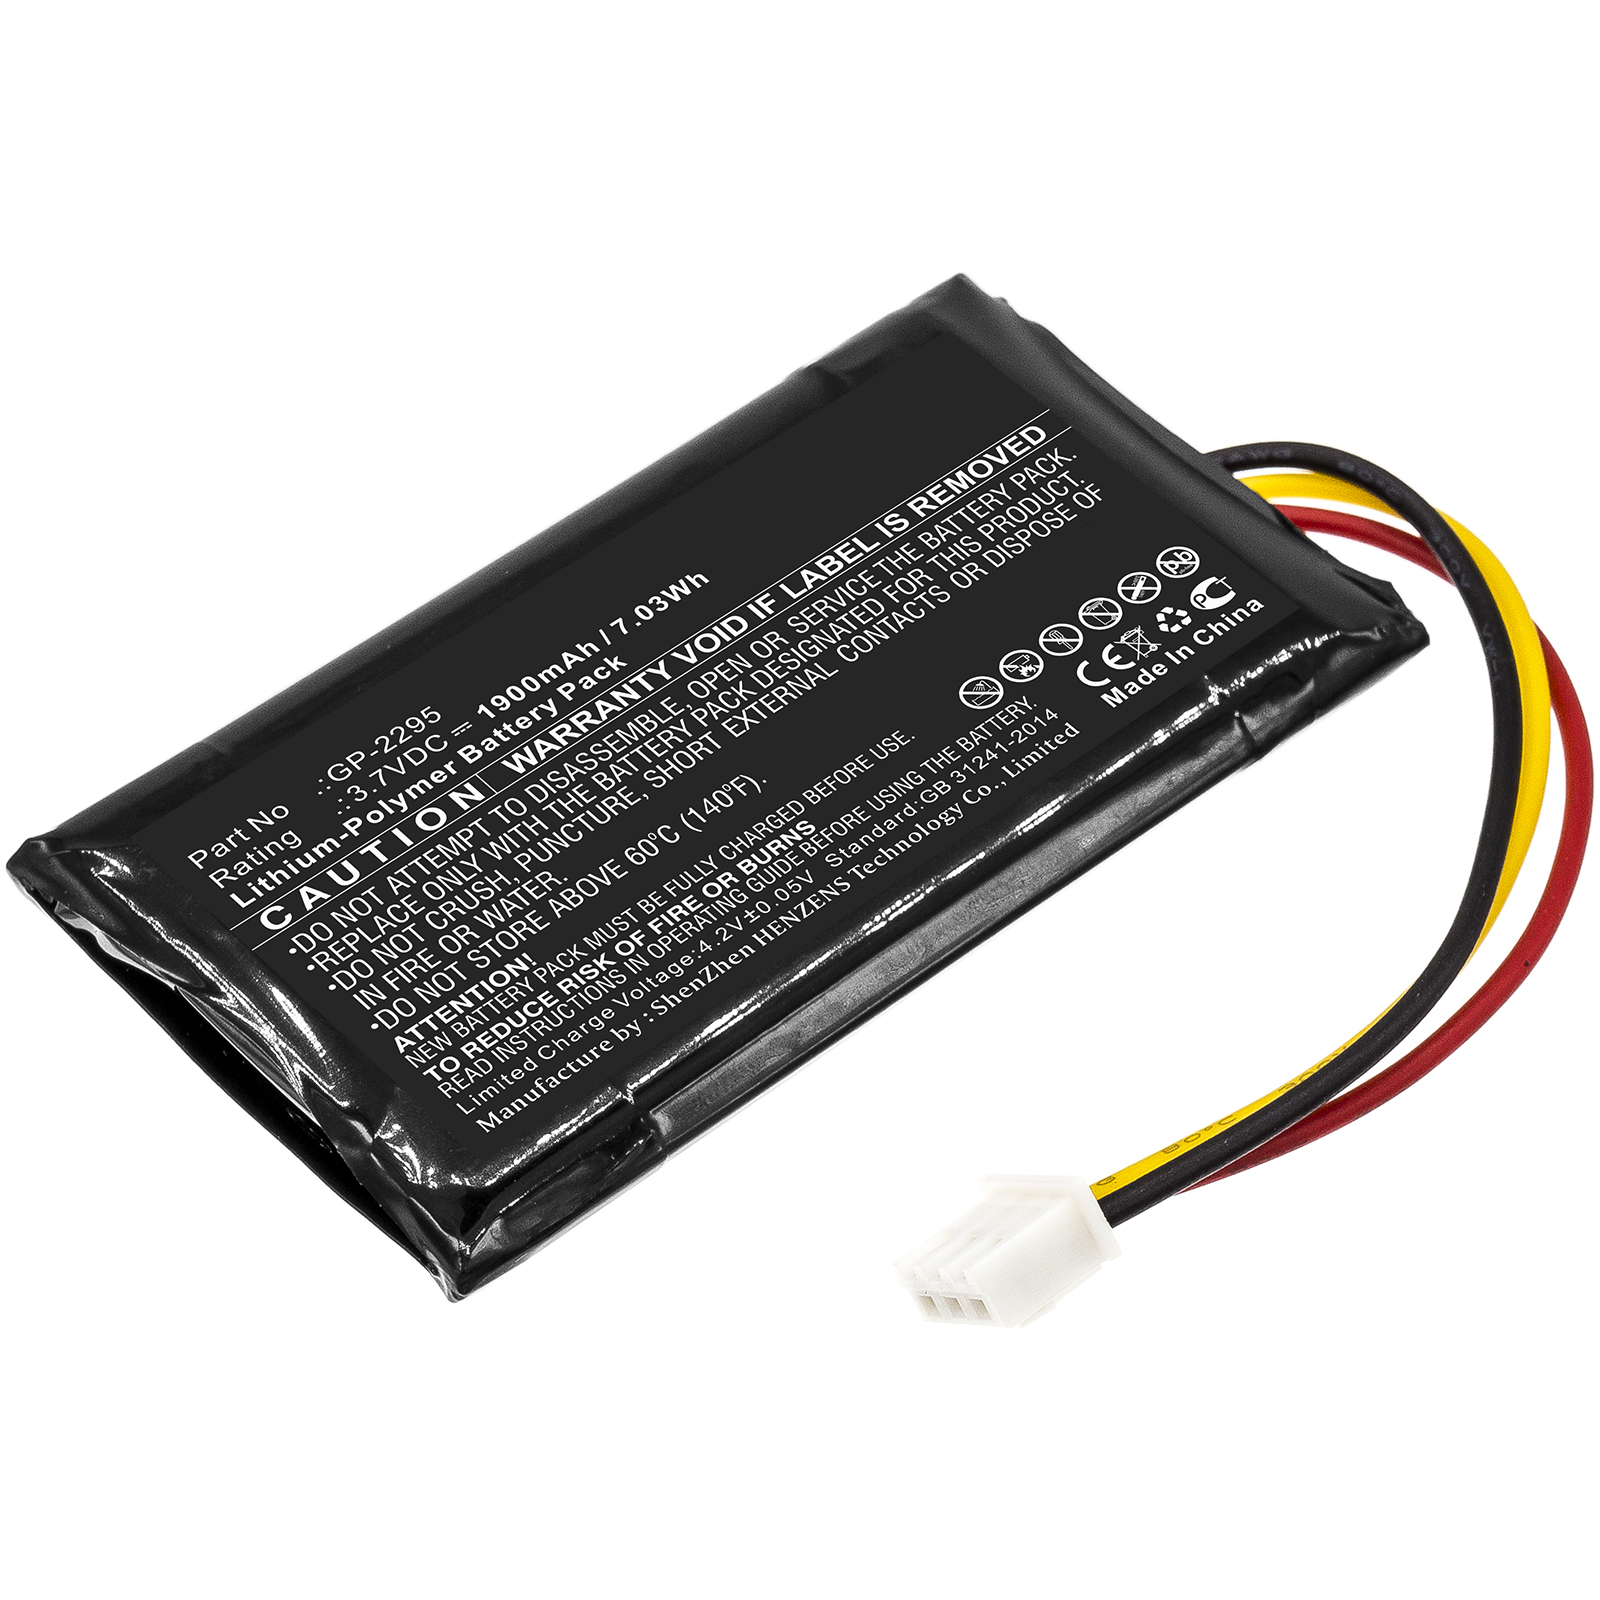 Synergy Digital Equipment Battery, Compatible with EXFO GP-2295 Equipment Battery (3.7V, Li-Pol, 1900mAh)